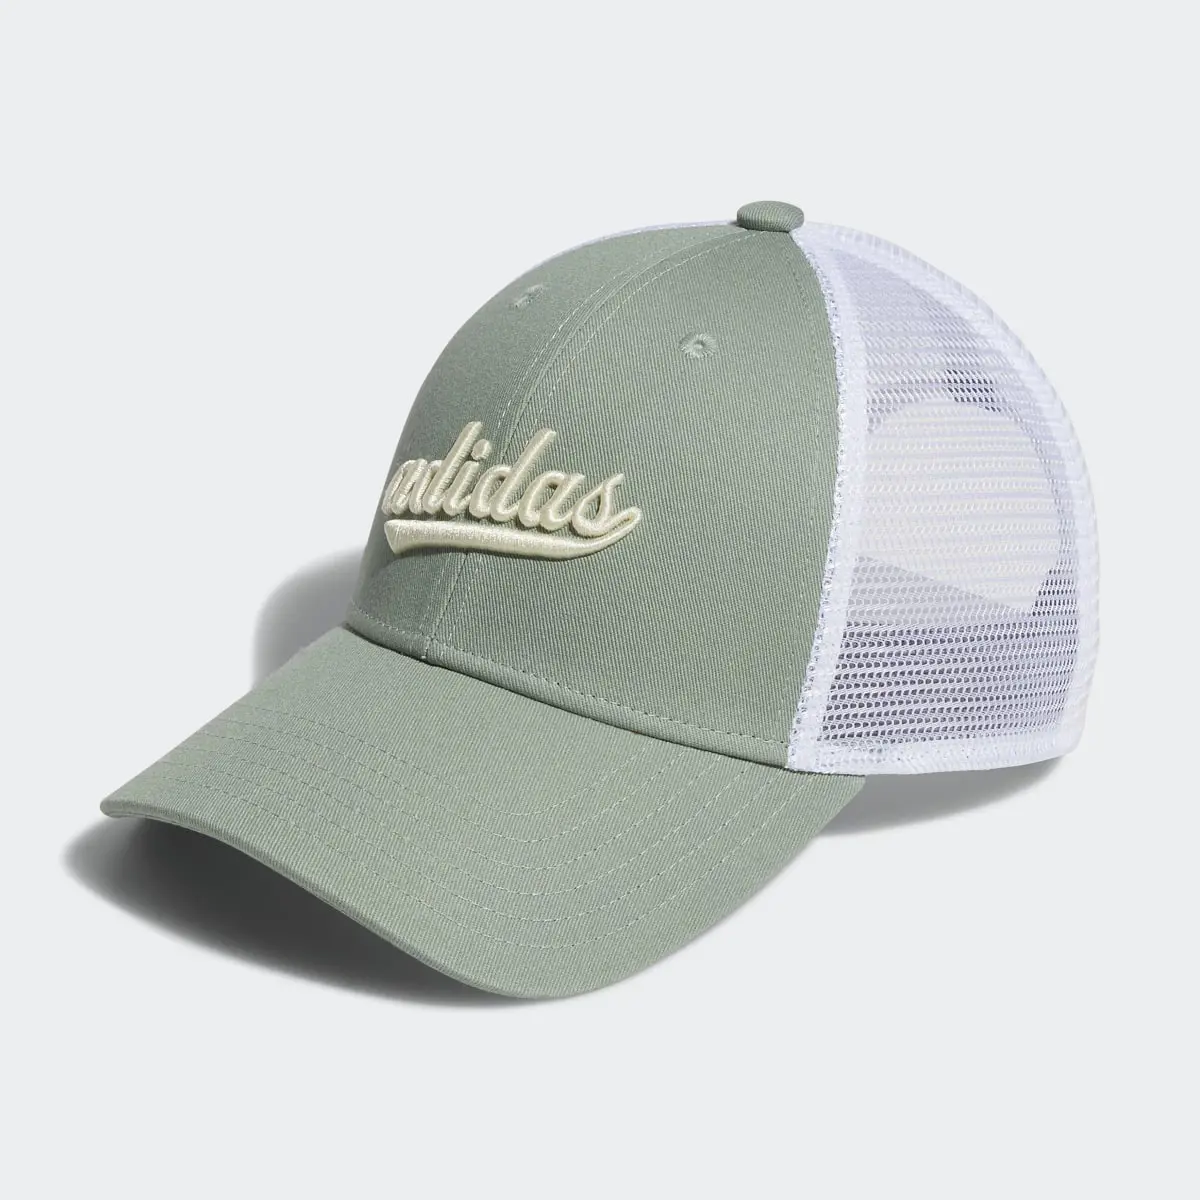 Adidas Mesh Trucker Hat. 2